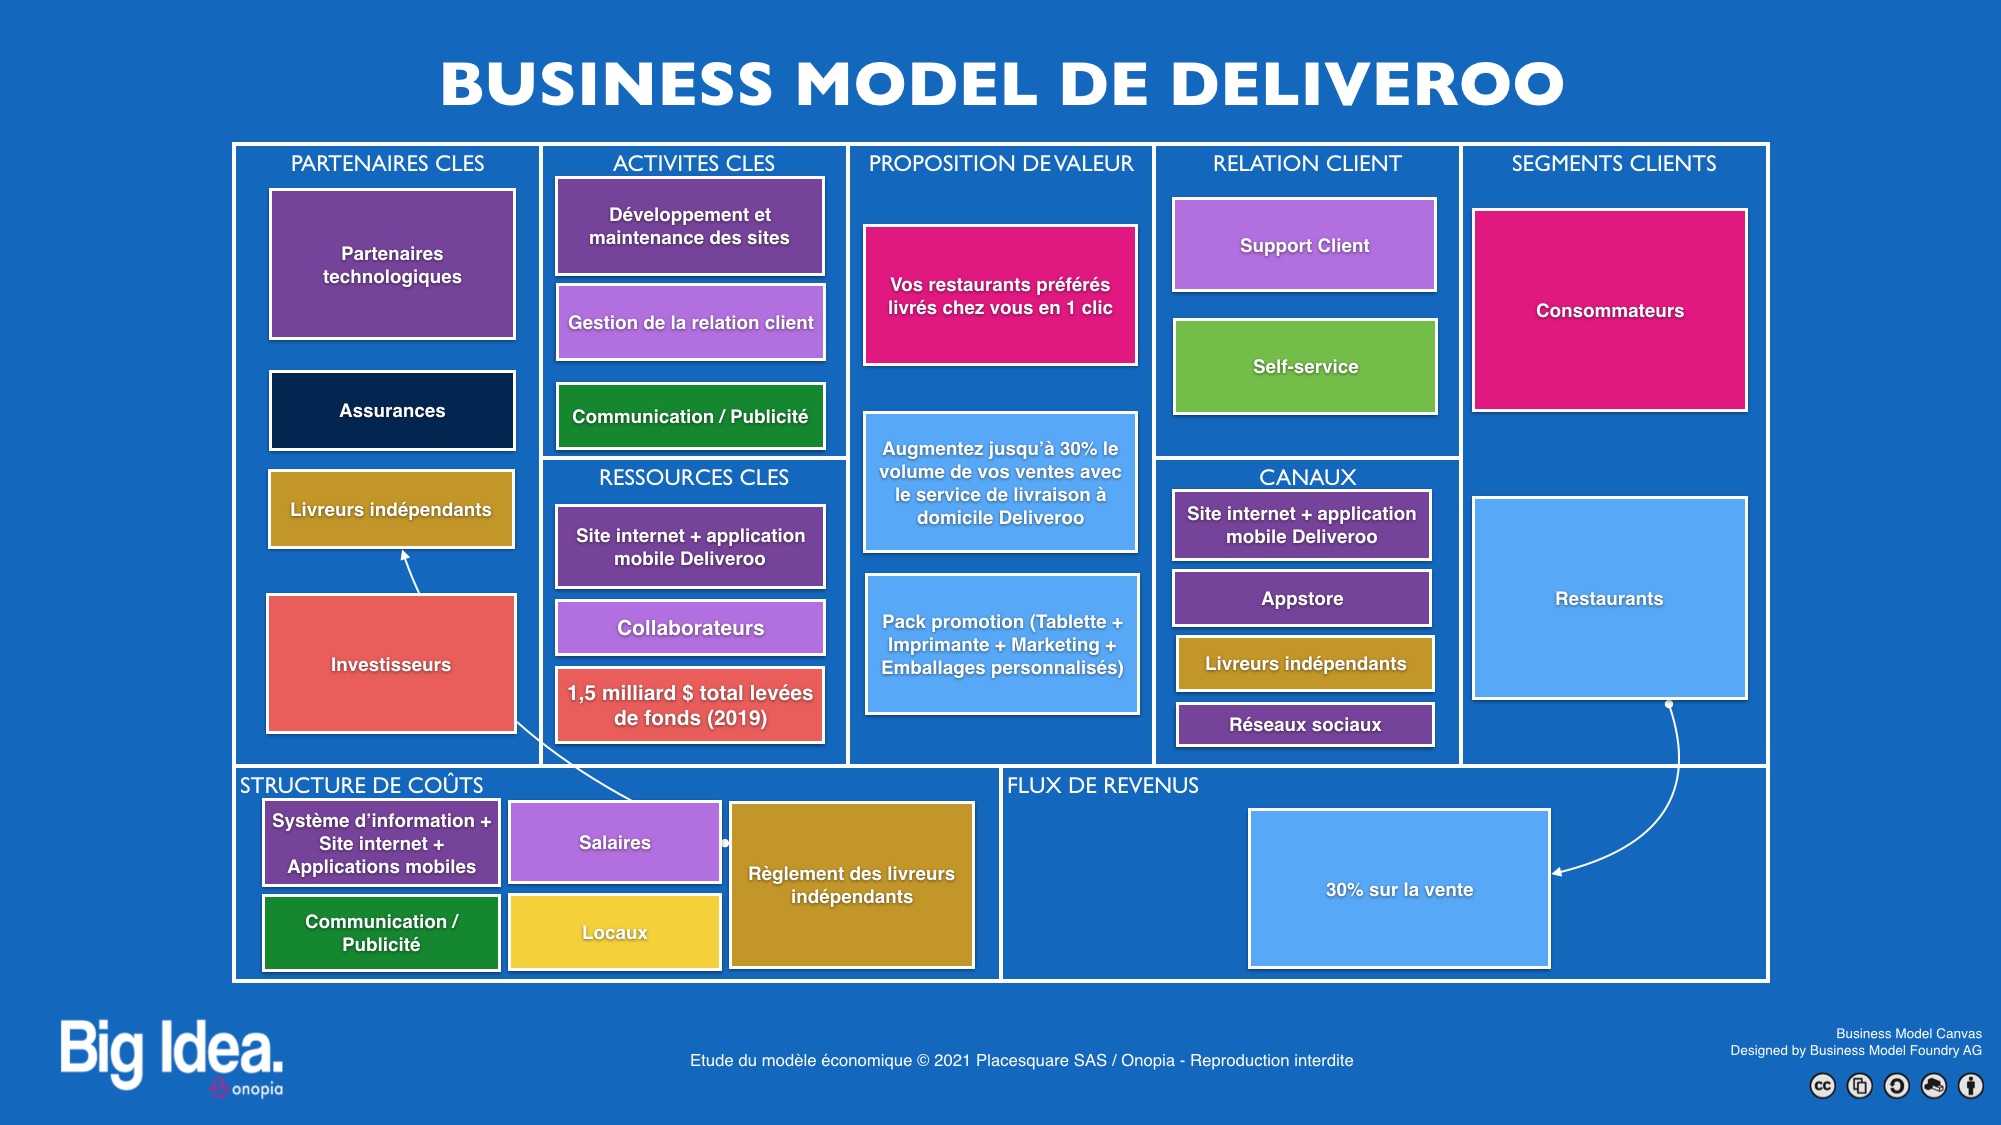 Big Idea Onopia - Business Model Canvas de Deliveroo